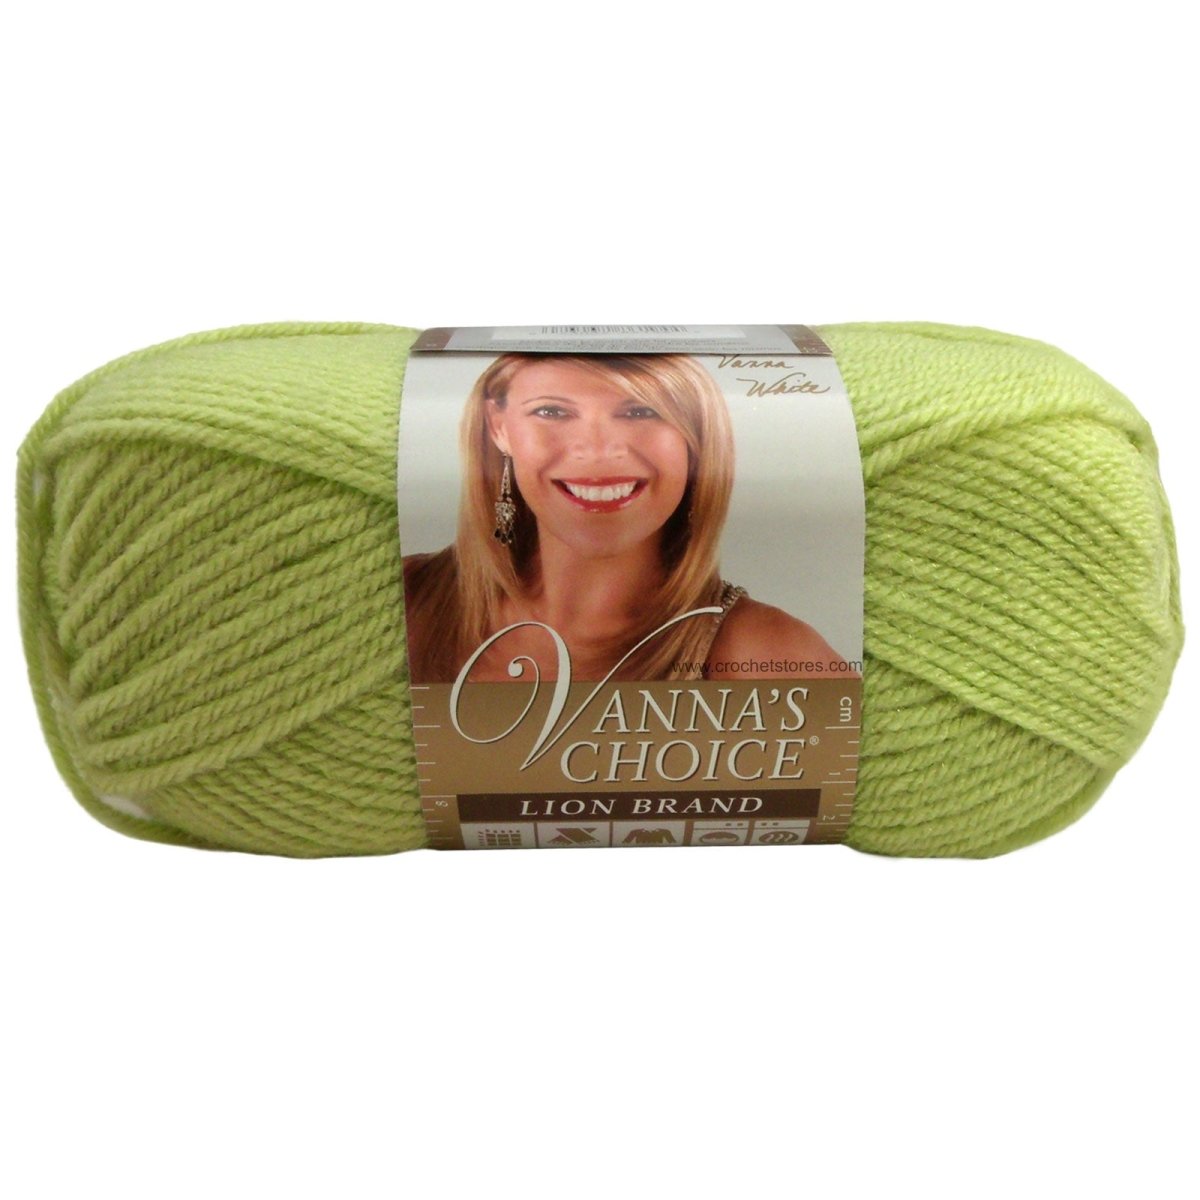 VANNAS CHOICE - Crochetstores860-192